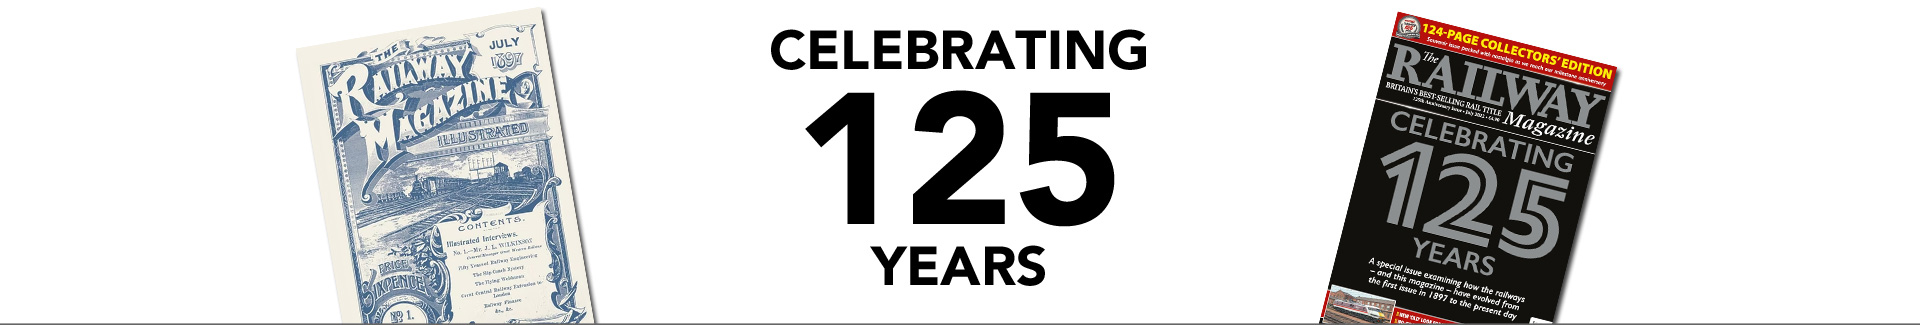 The Railway Magazine - Celebrating 125 Years